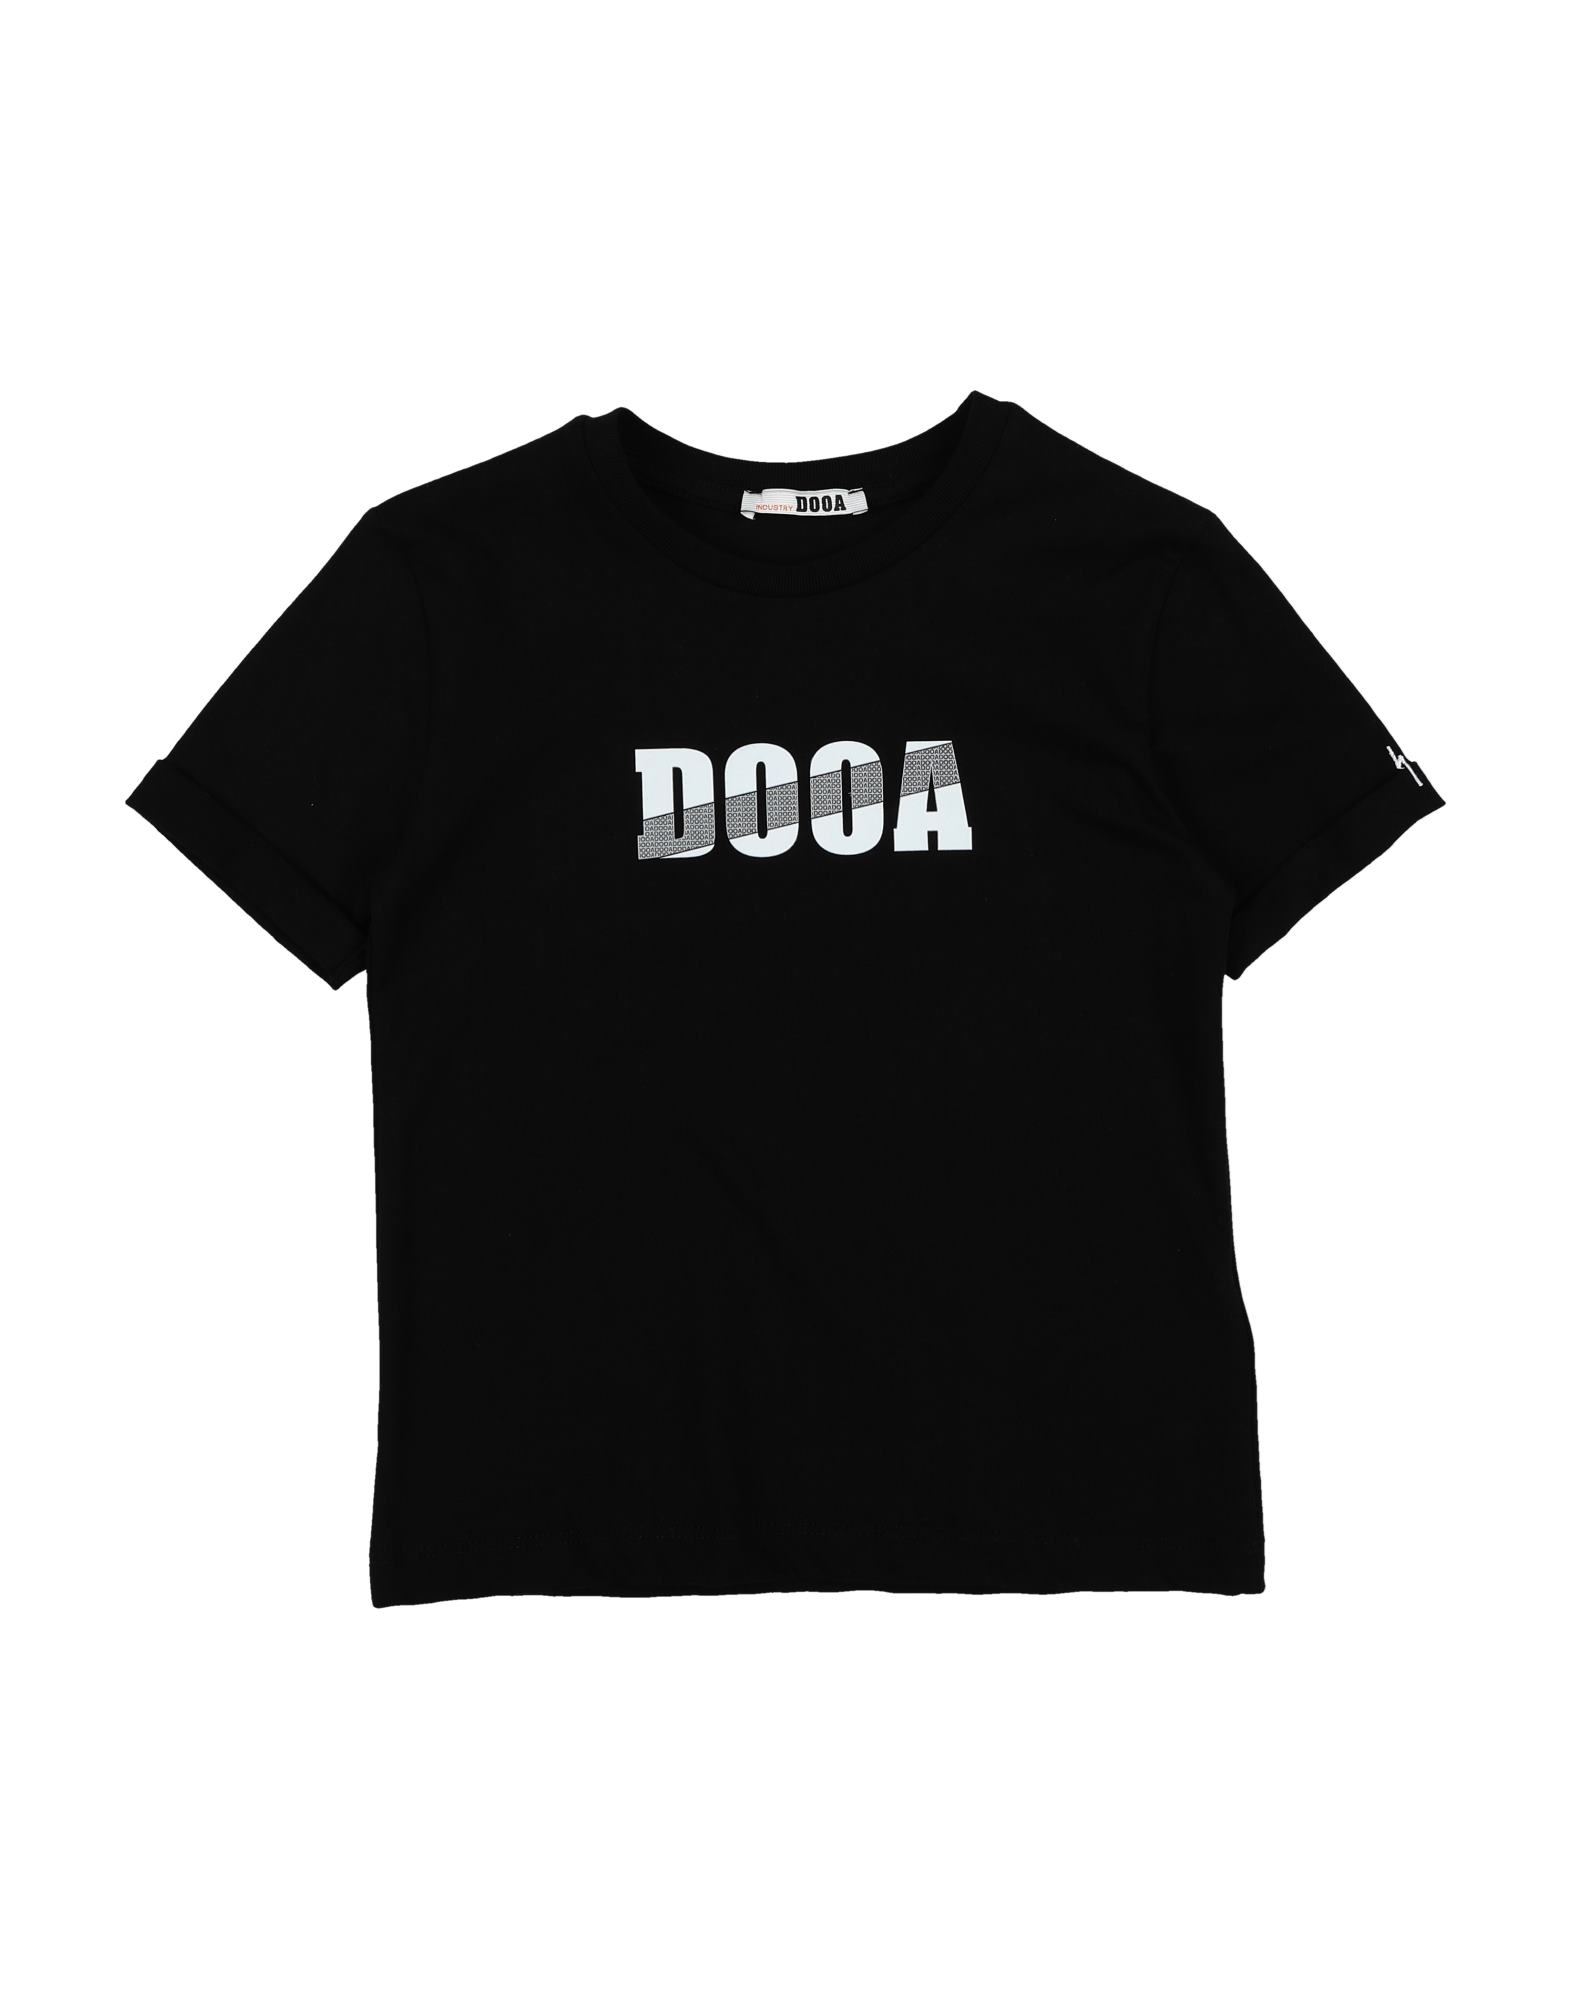 DOOA T-shirts Kinder Schwarz von DOOA